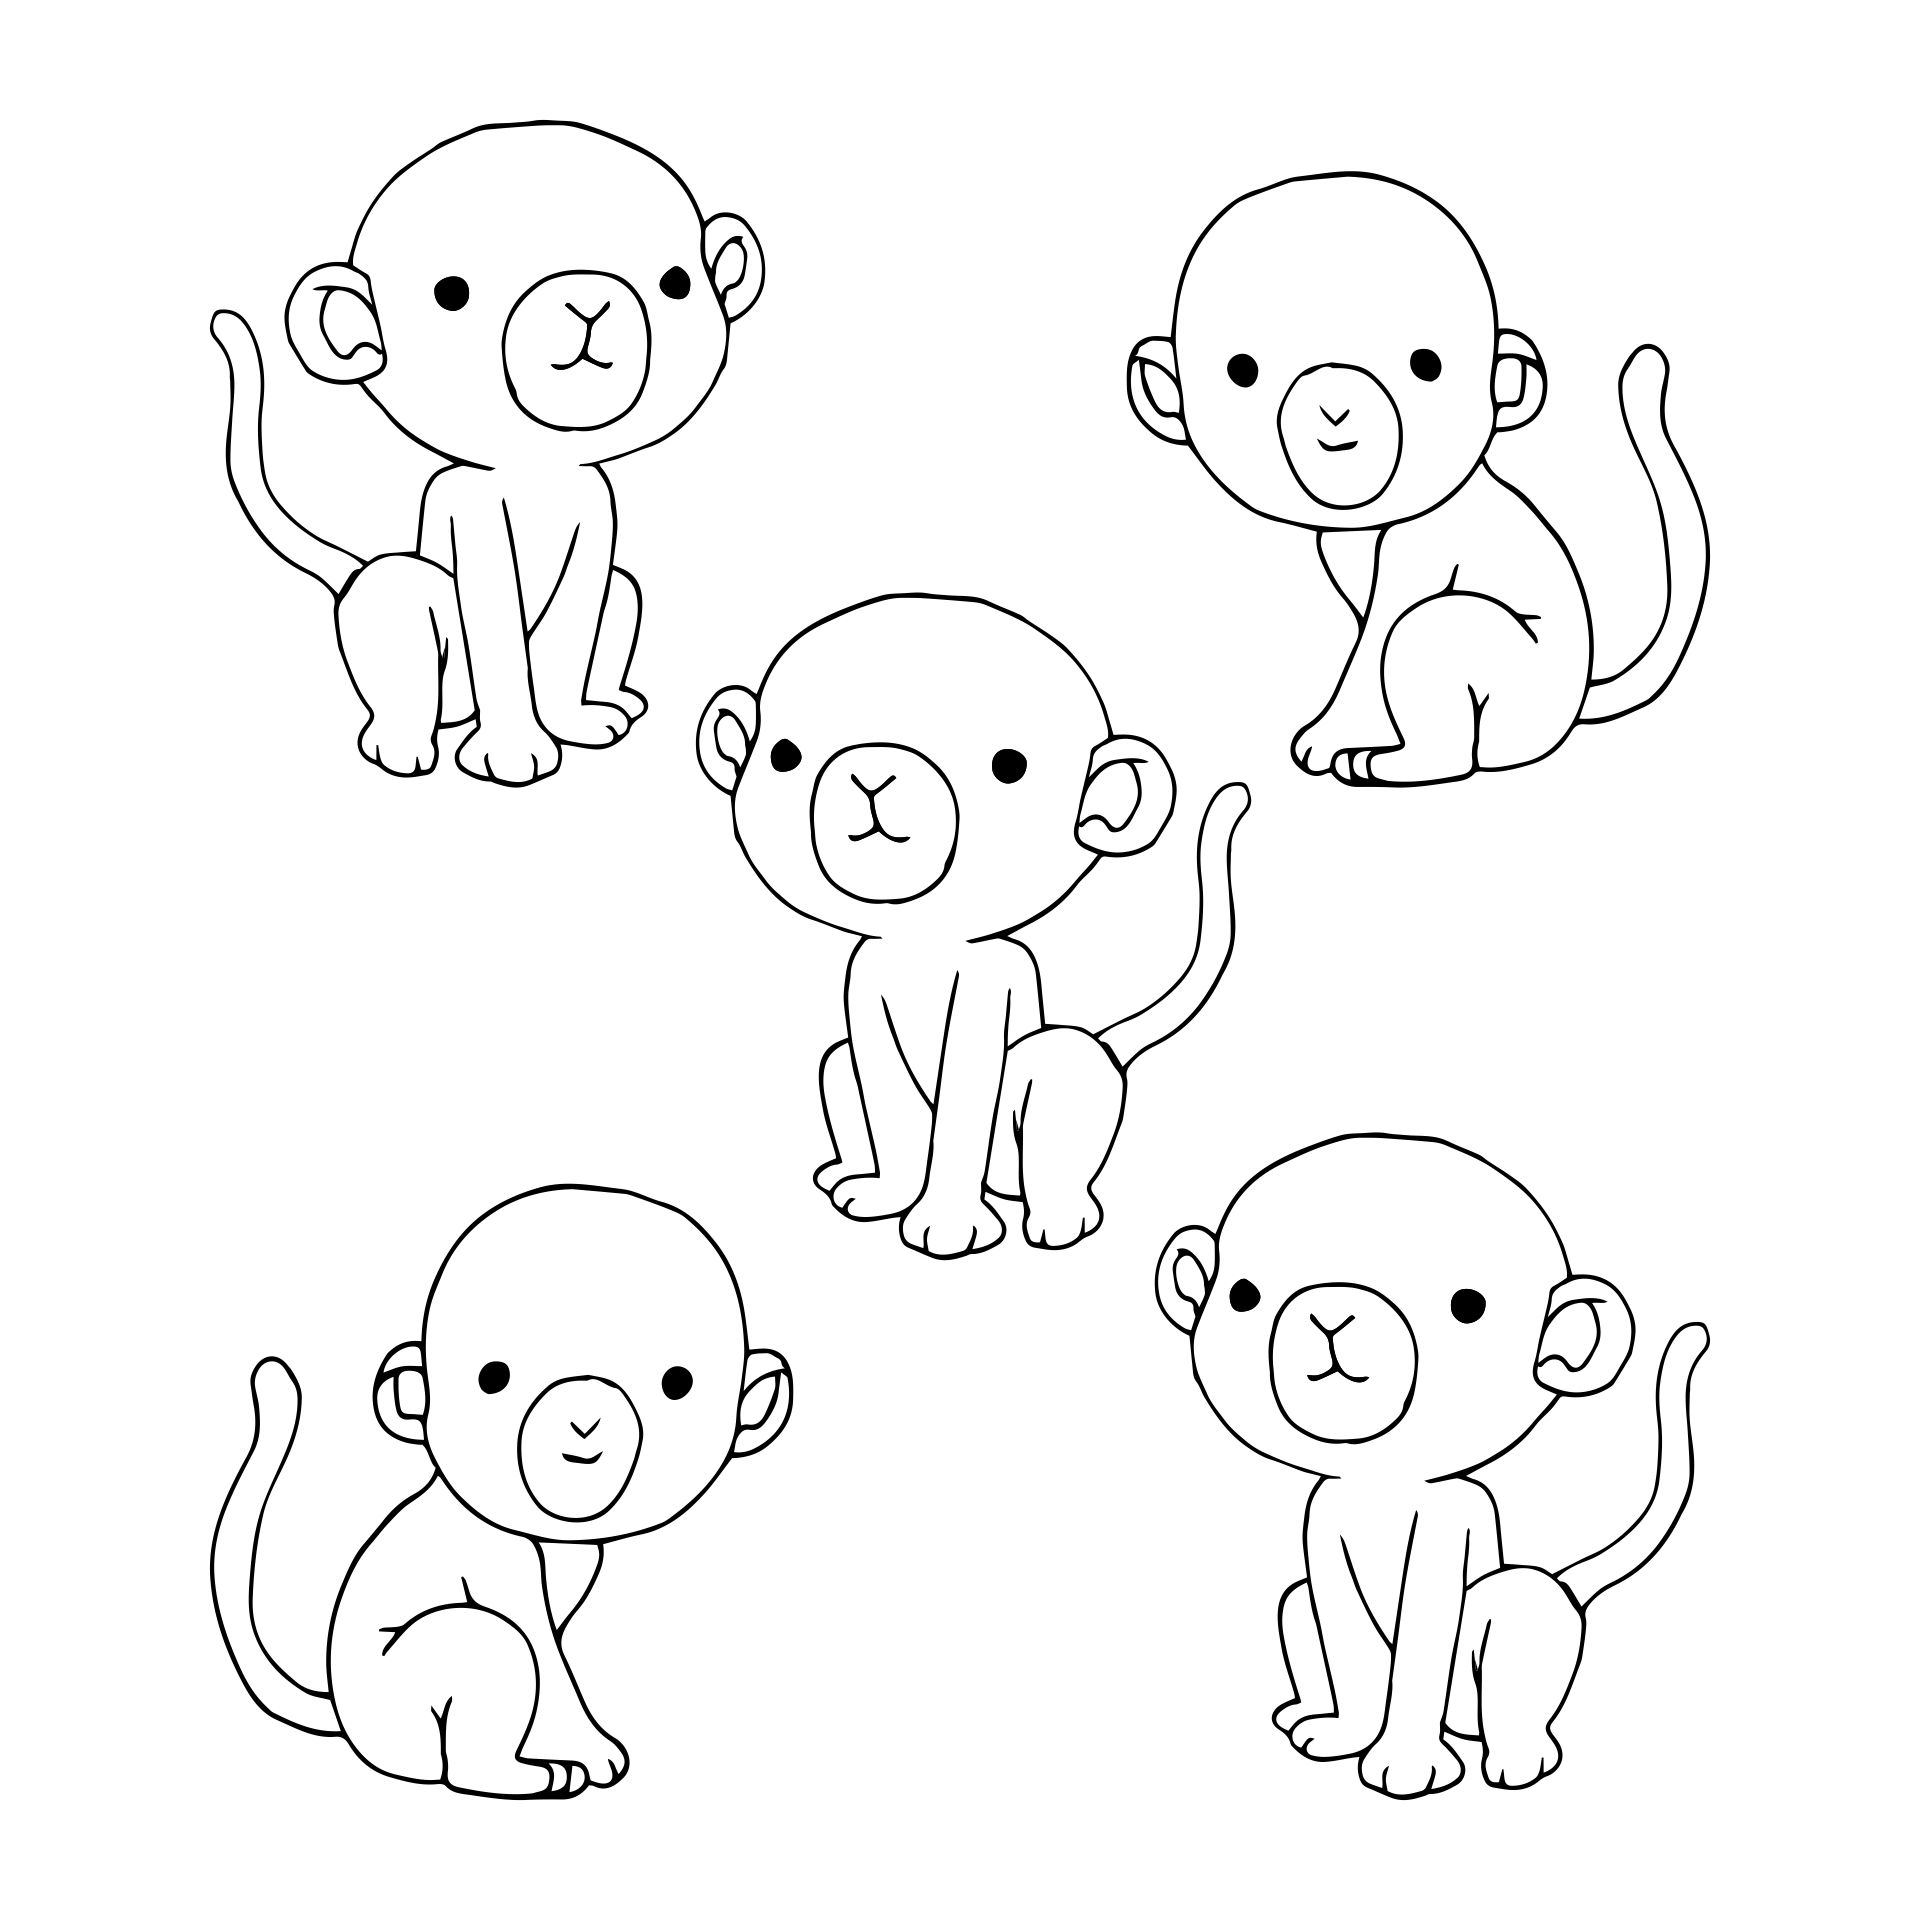 The Five Little Monkeys Coloring Worksheet